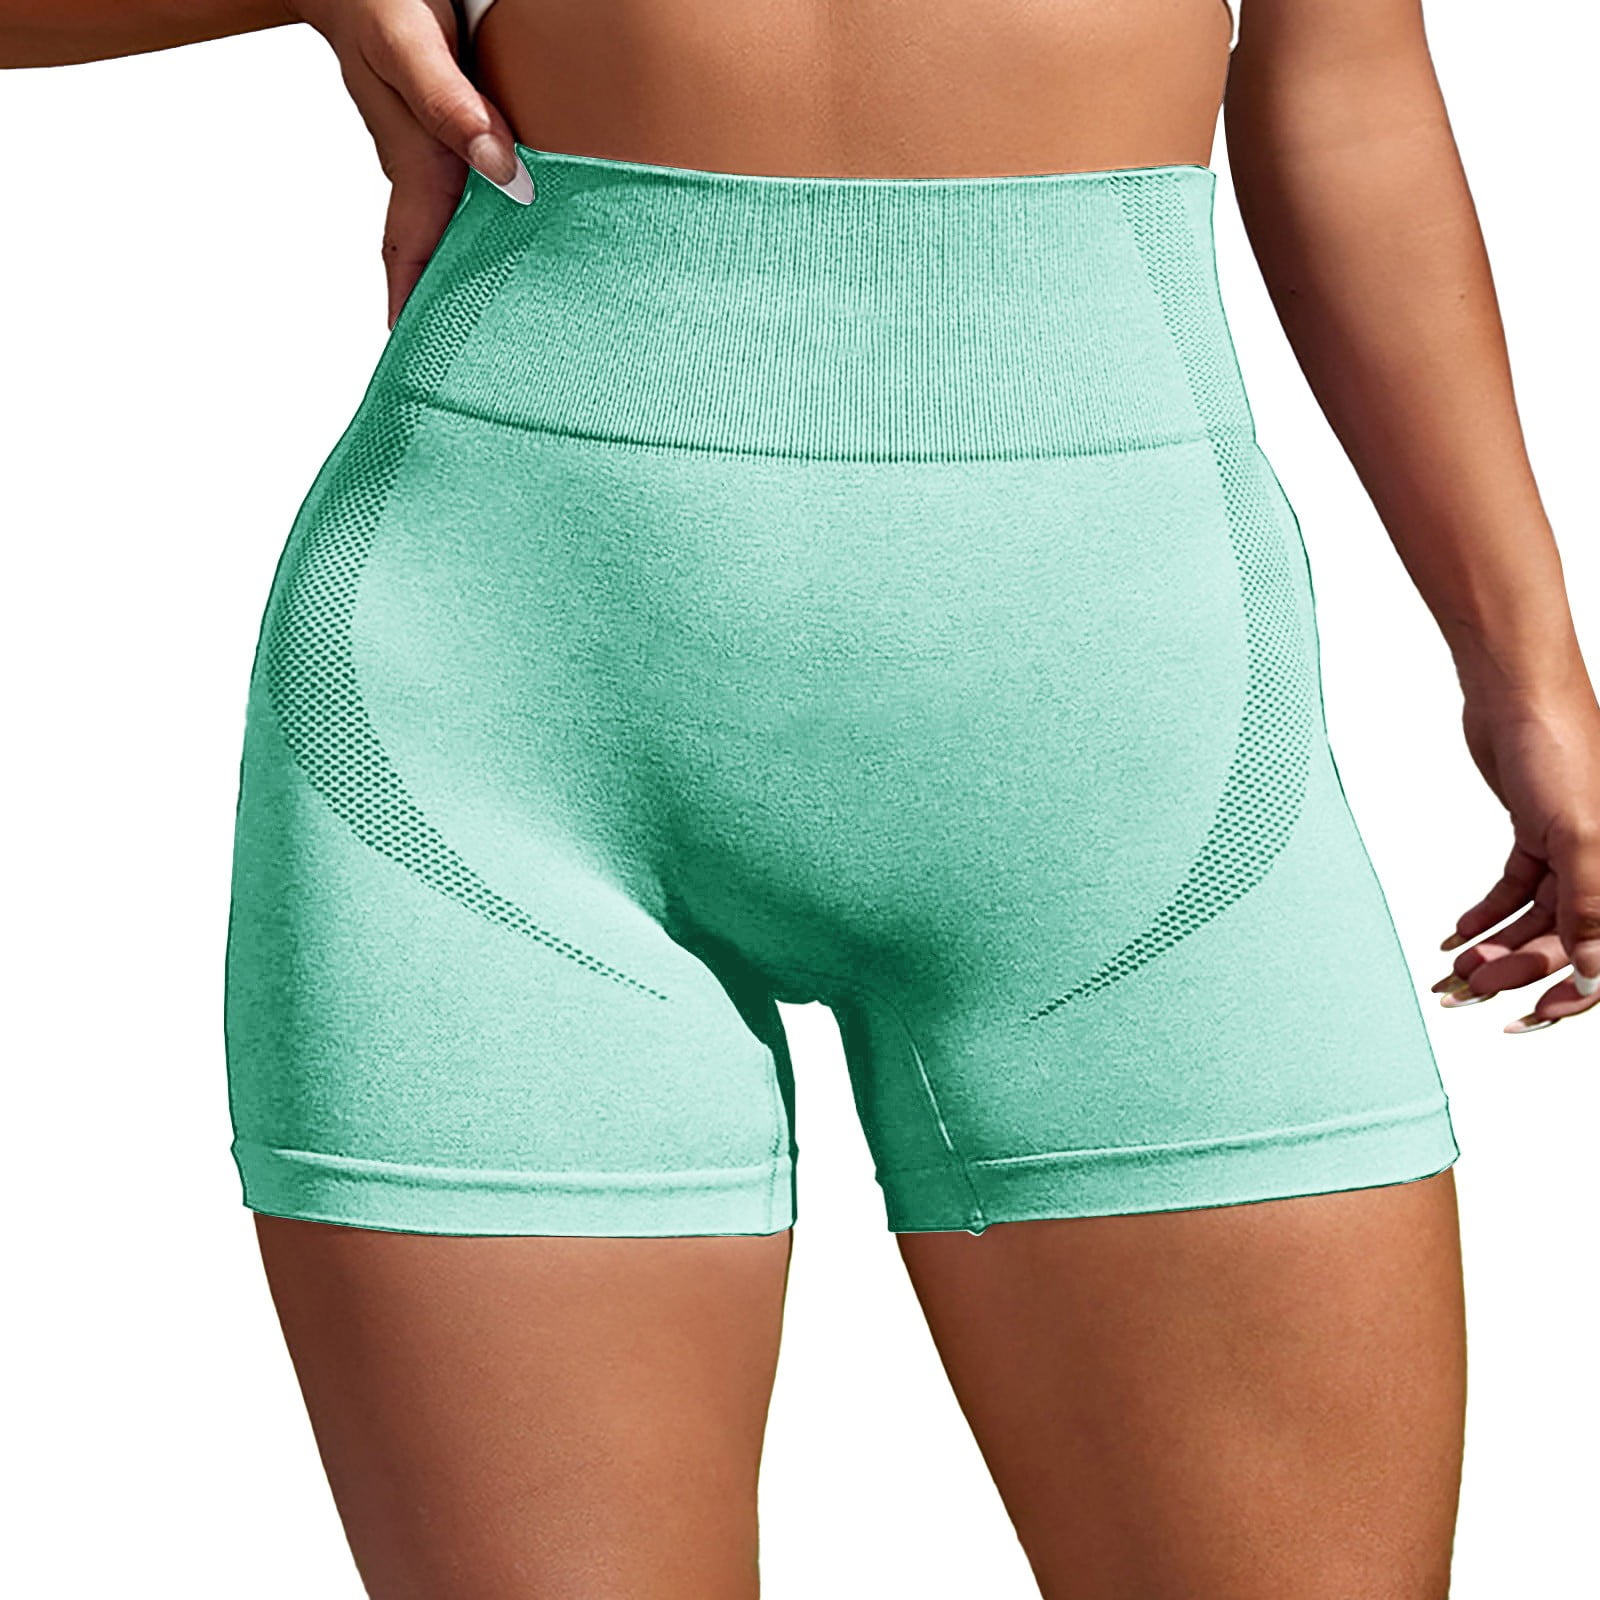 Buy Half Hot Pants Women Girls Shorts for Cycling Gym Yoga Beach High Waist  Crimping Short Trousers Gray at